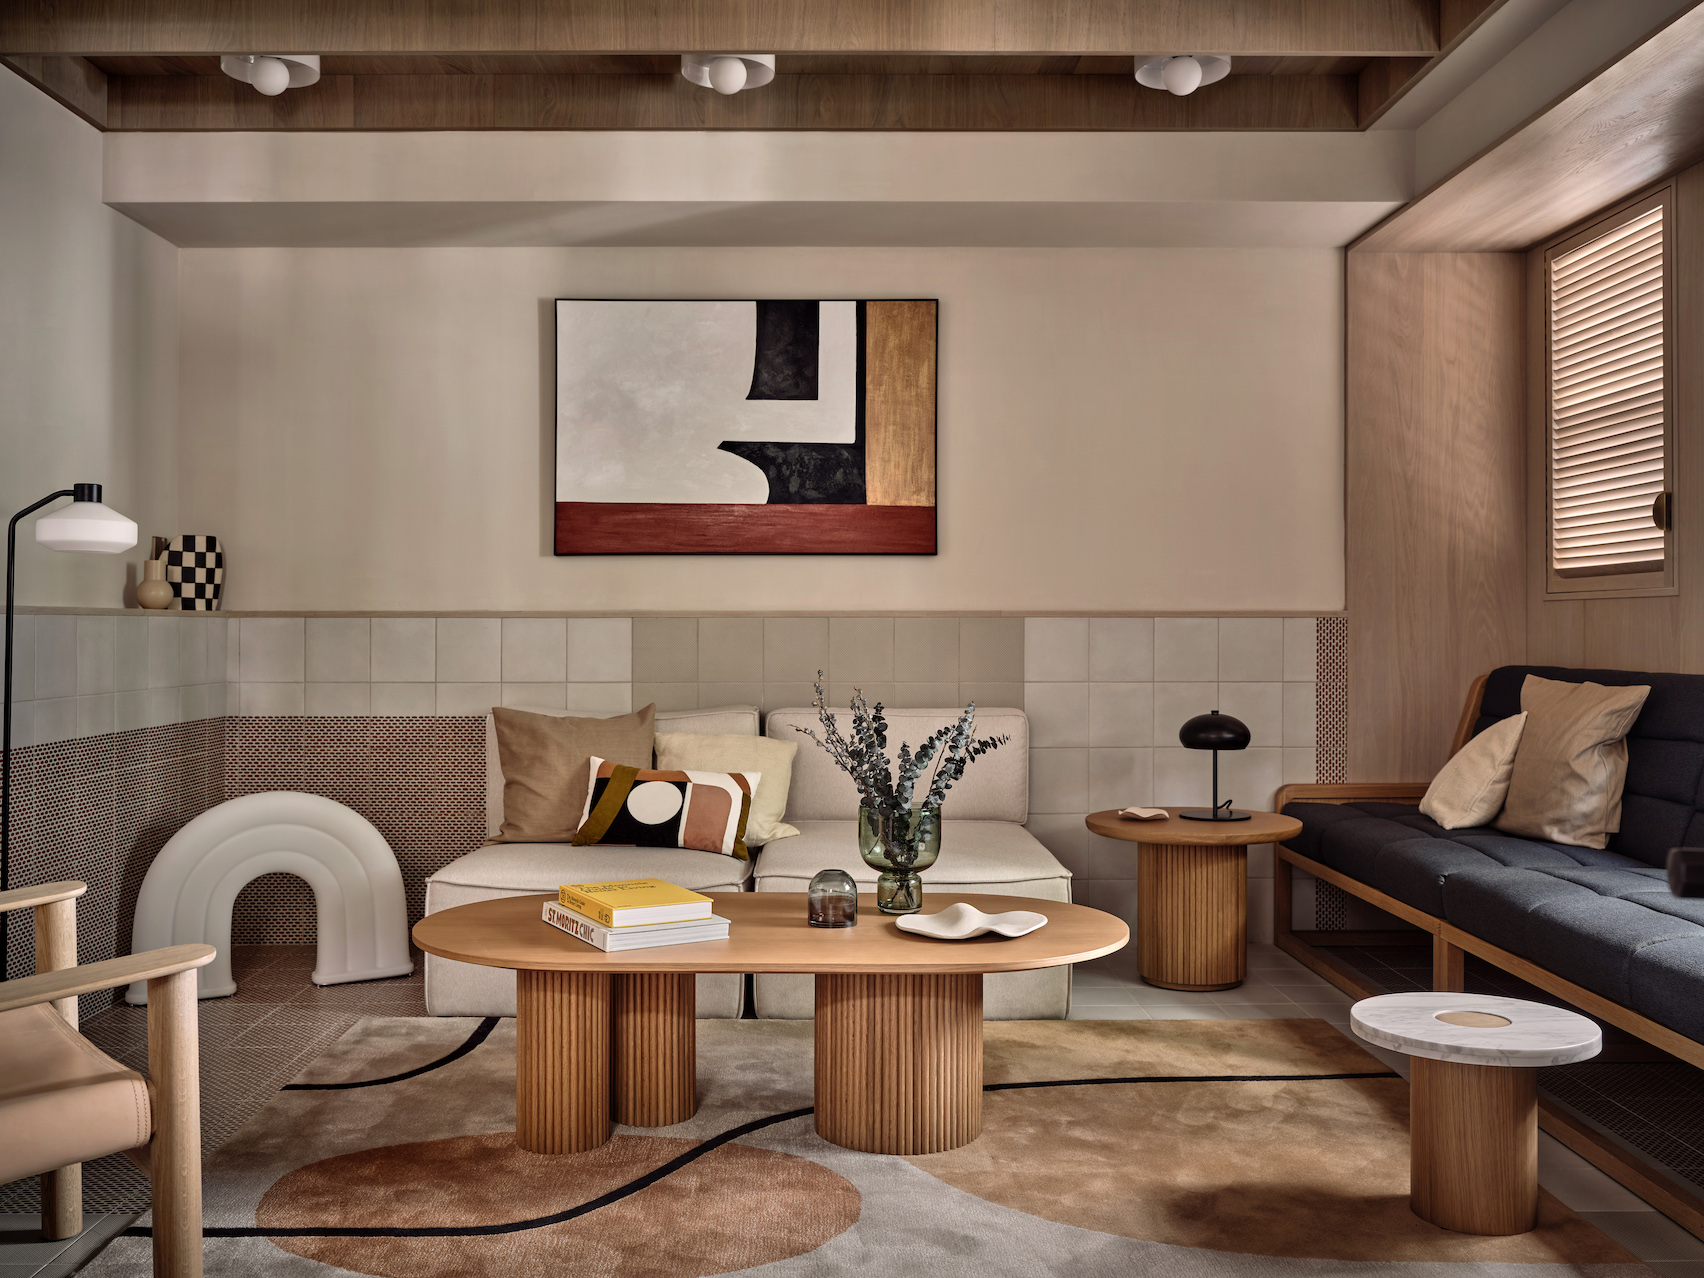 Linehouse designs Hong Kong hotel to evoke the comfort of home